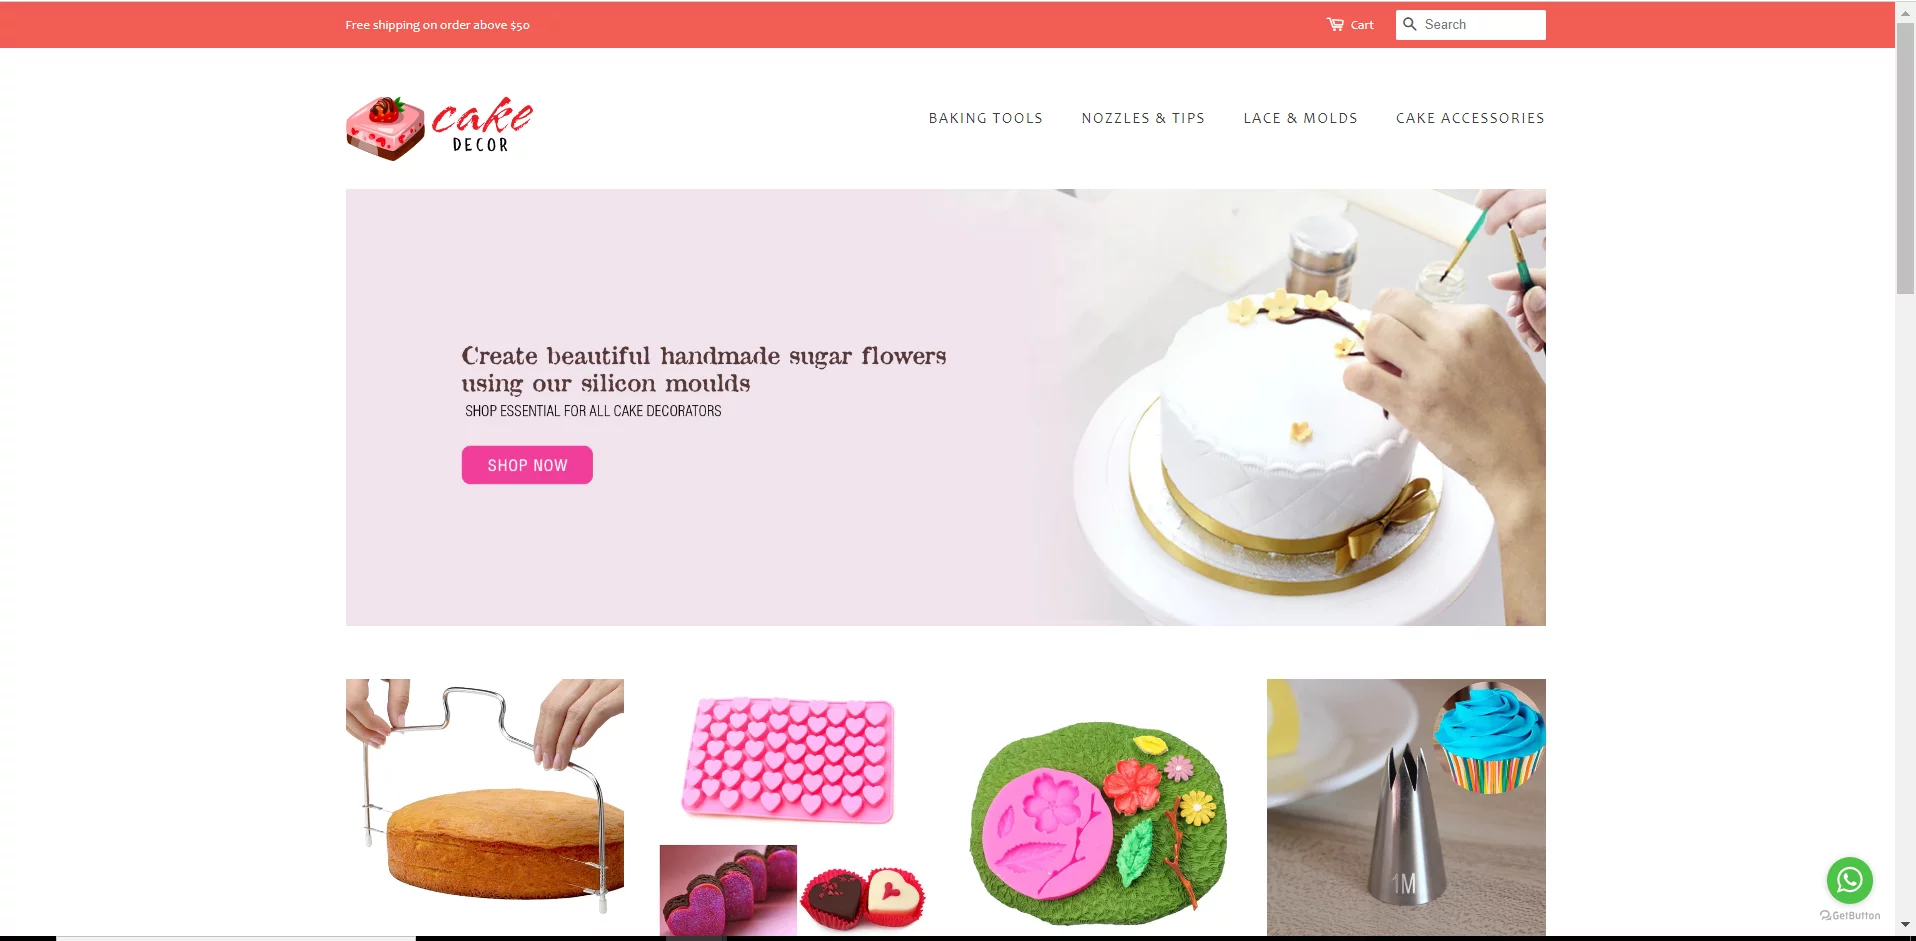 Where to buy Prebuilt Shopify Cake Decoration Stores?